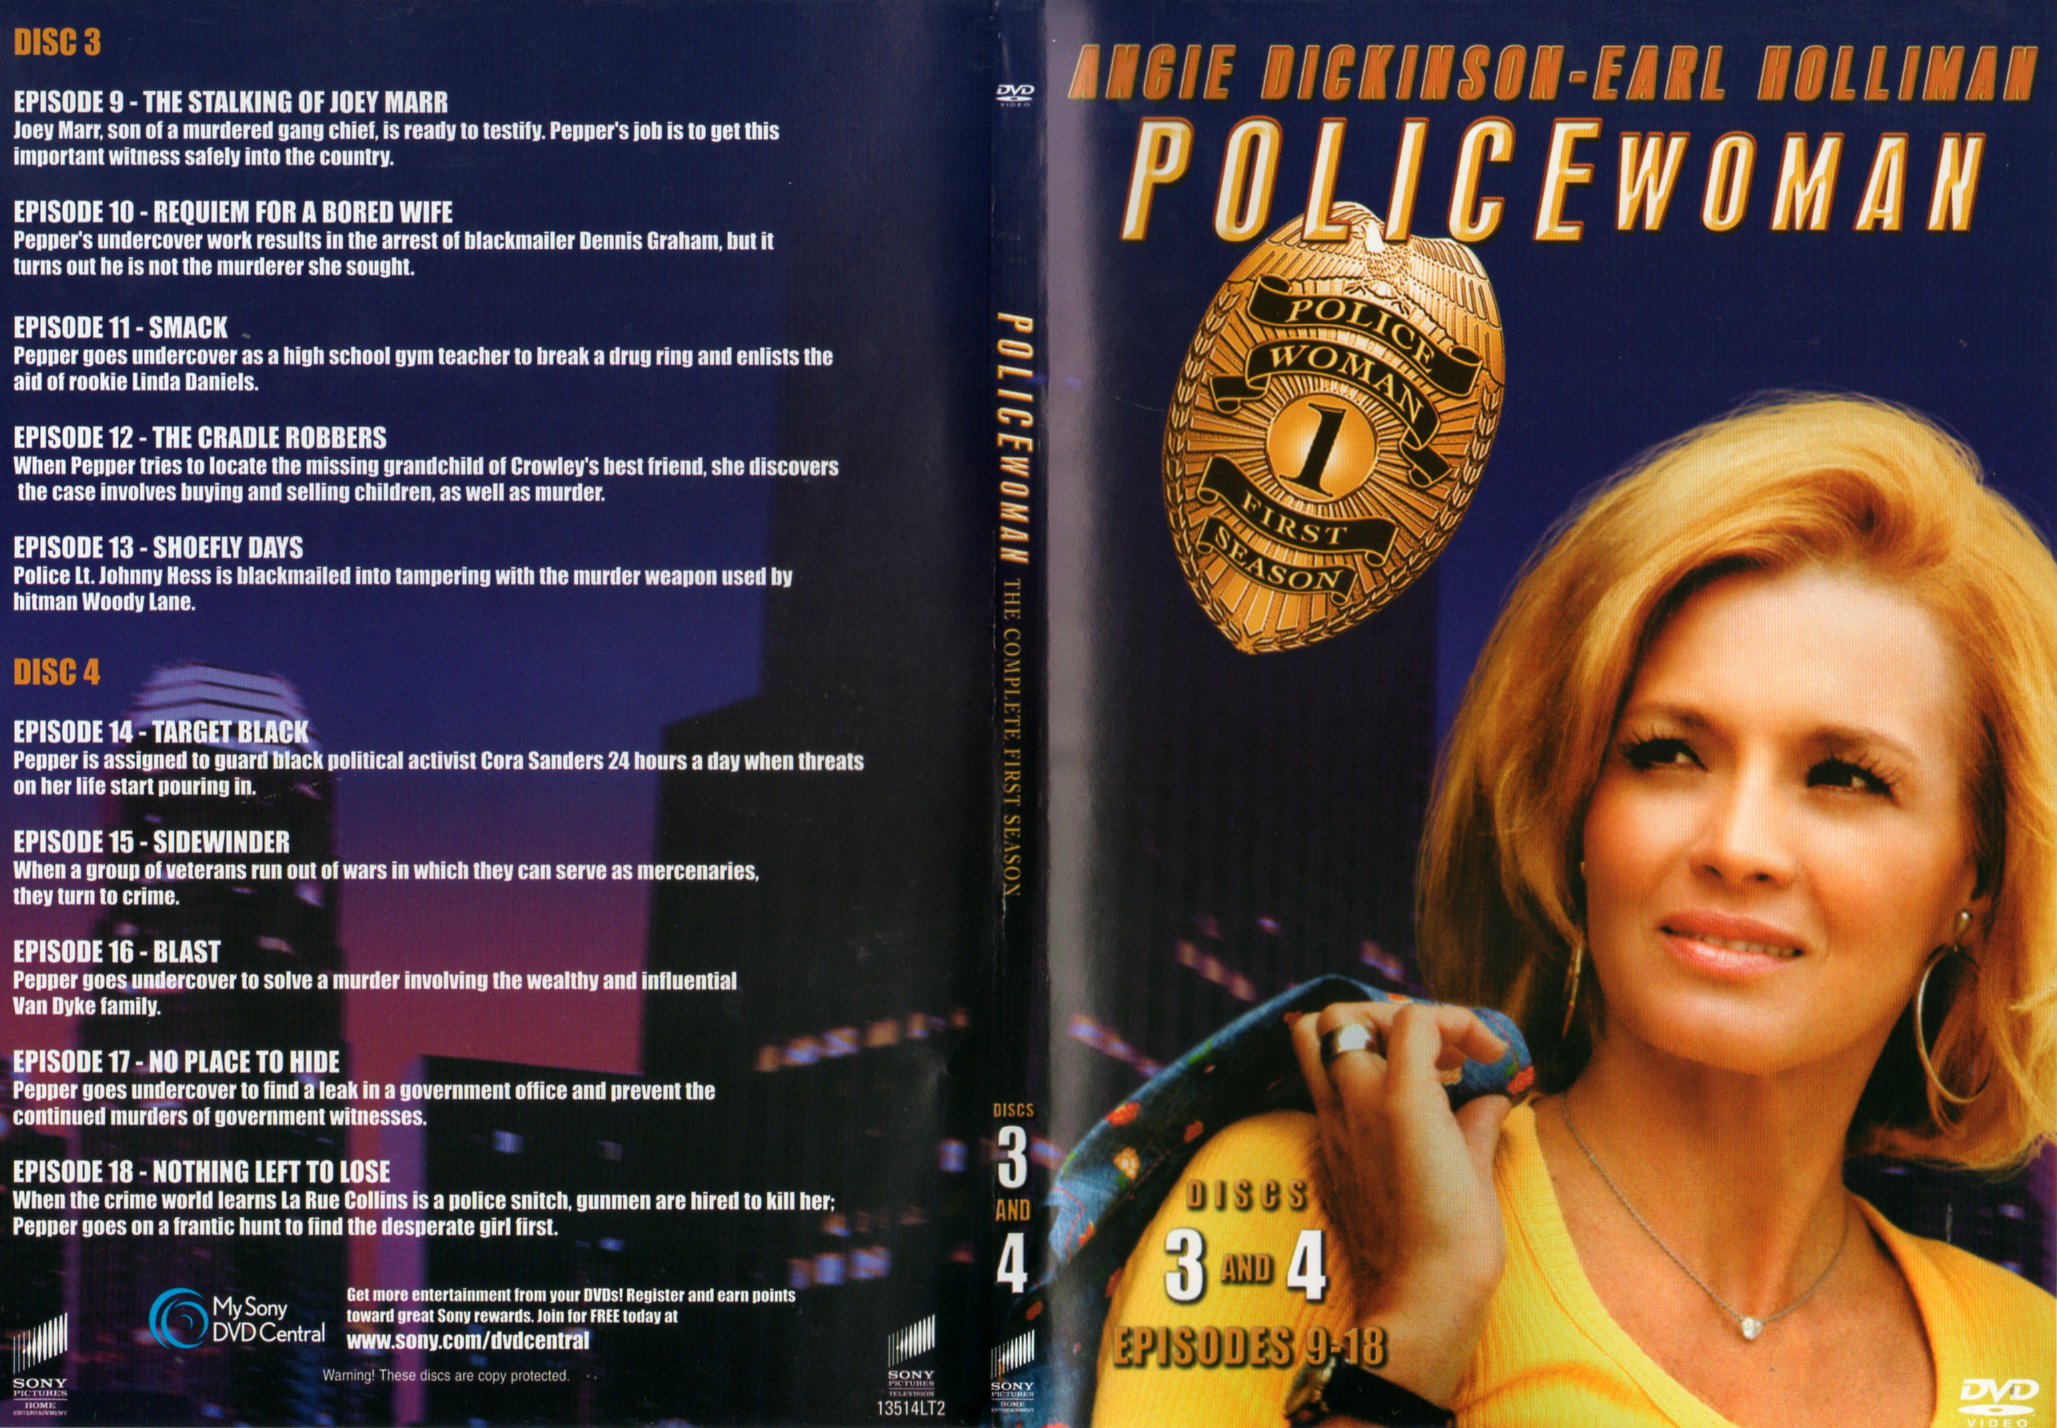 Jaquette DVD Police Woman Saison 1 DVD 2 Zone 1